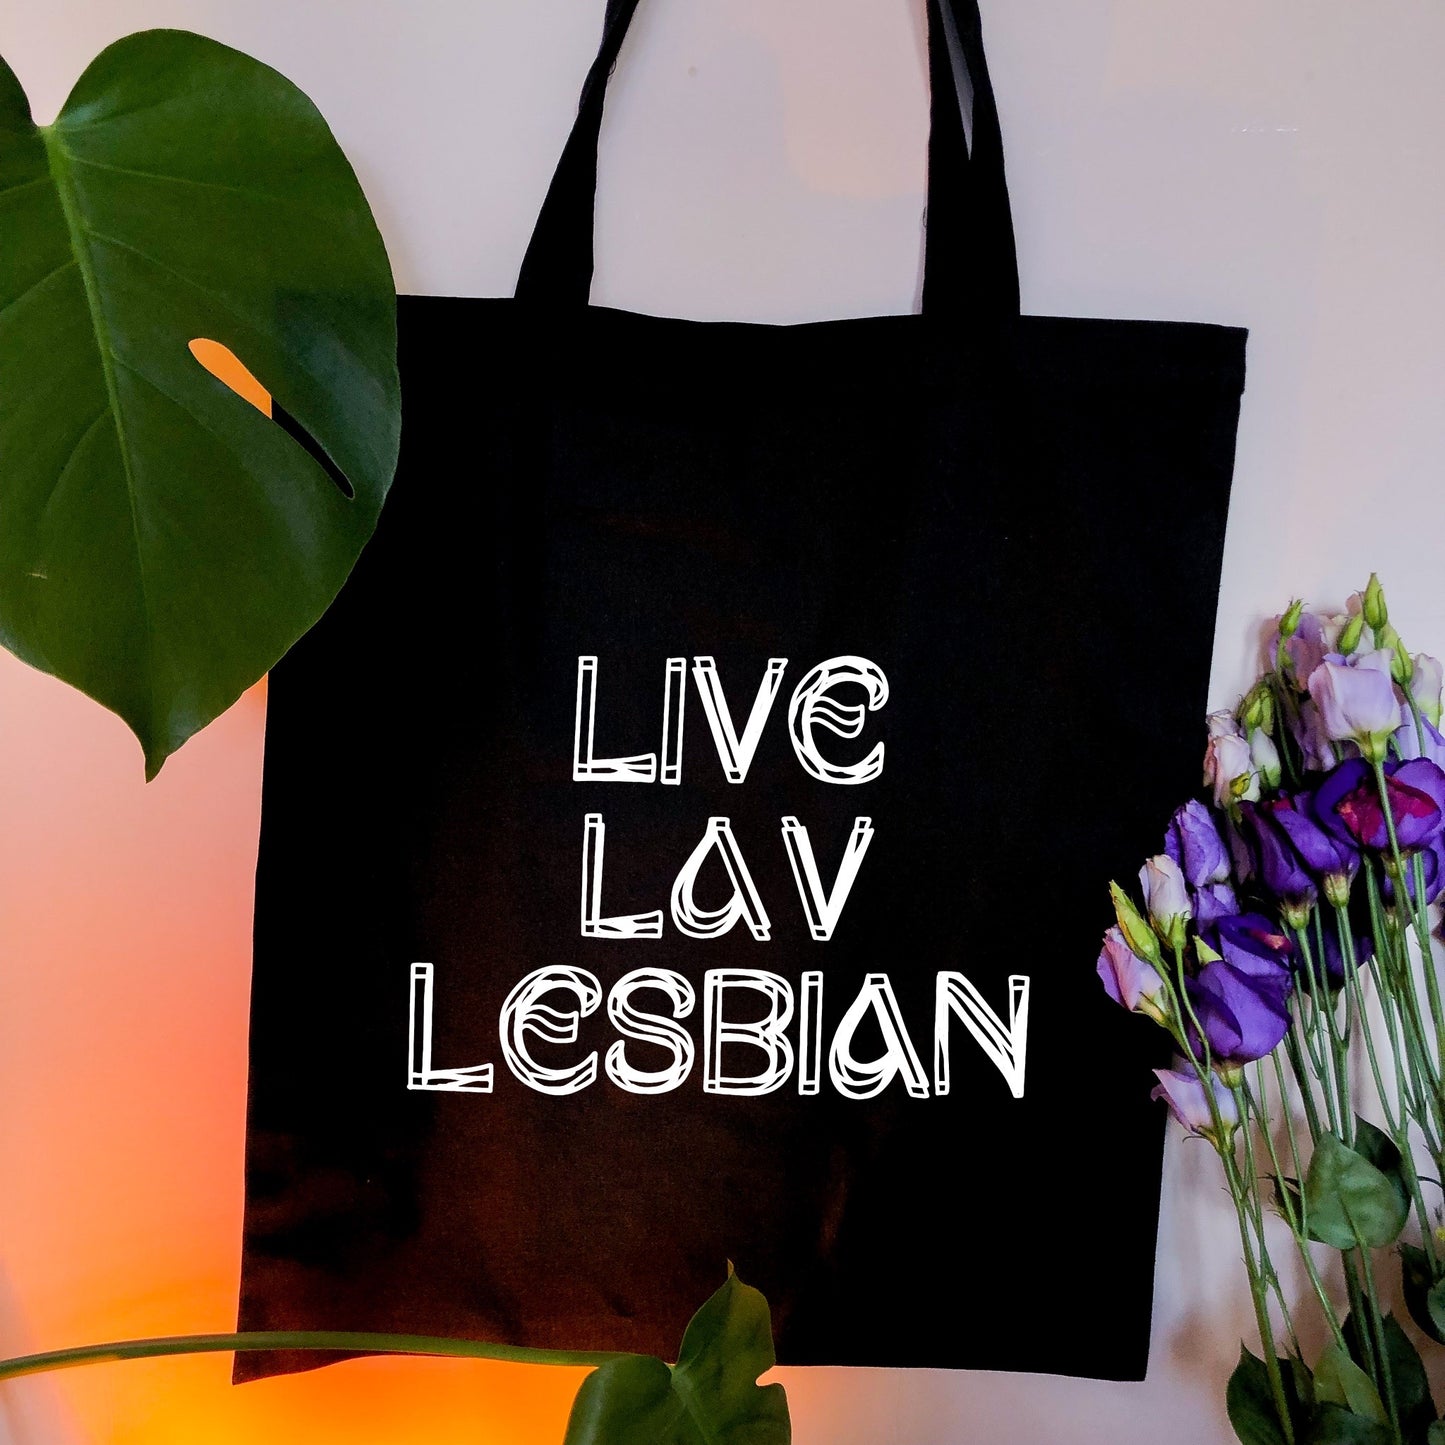 Live Lav Lesbian, black tote bag with white vinyl text. Leftbians Collab with Lavender Rodriguez